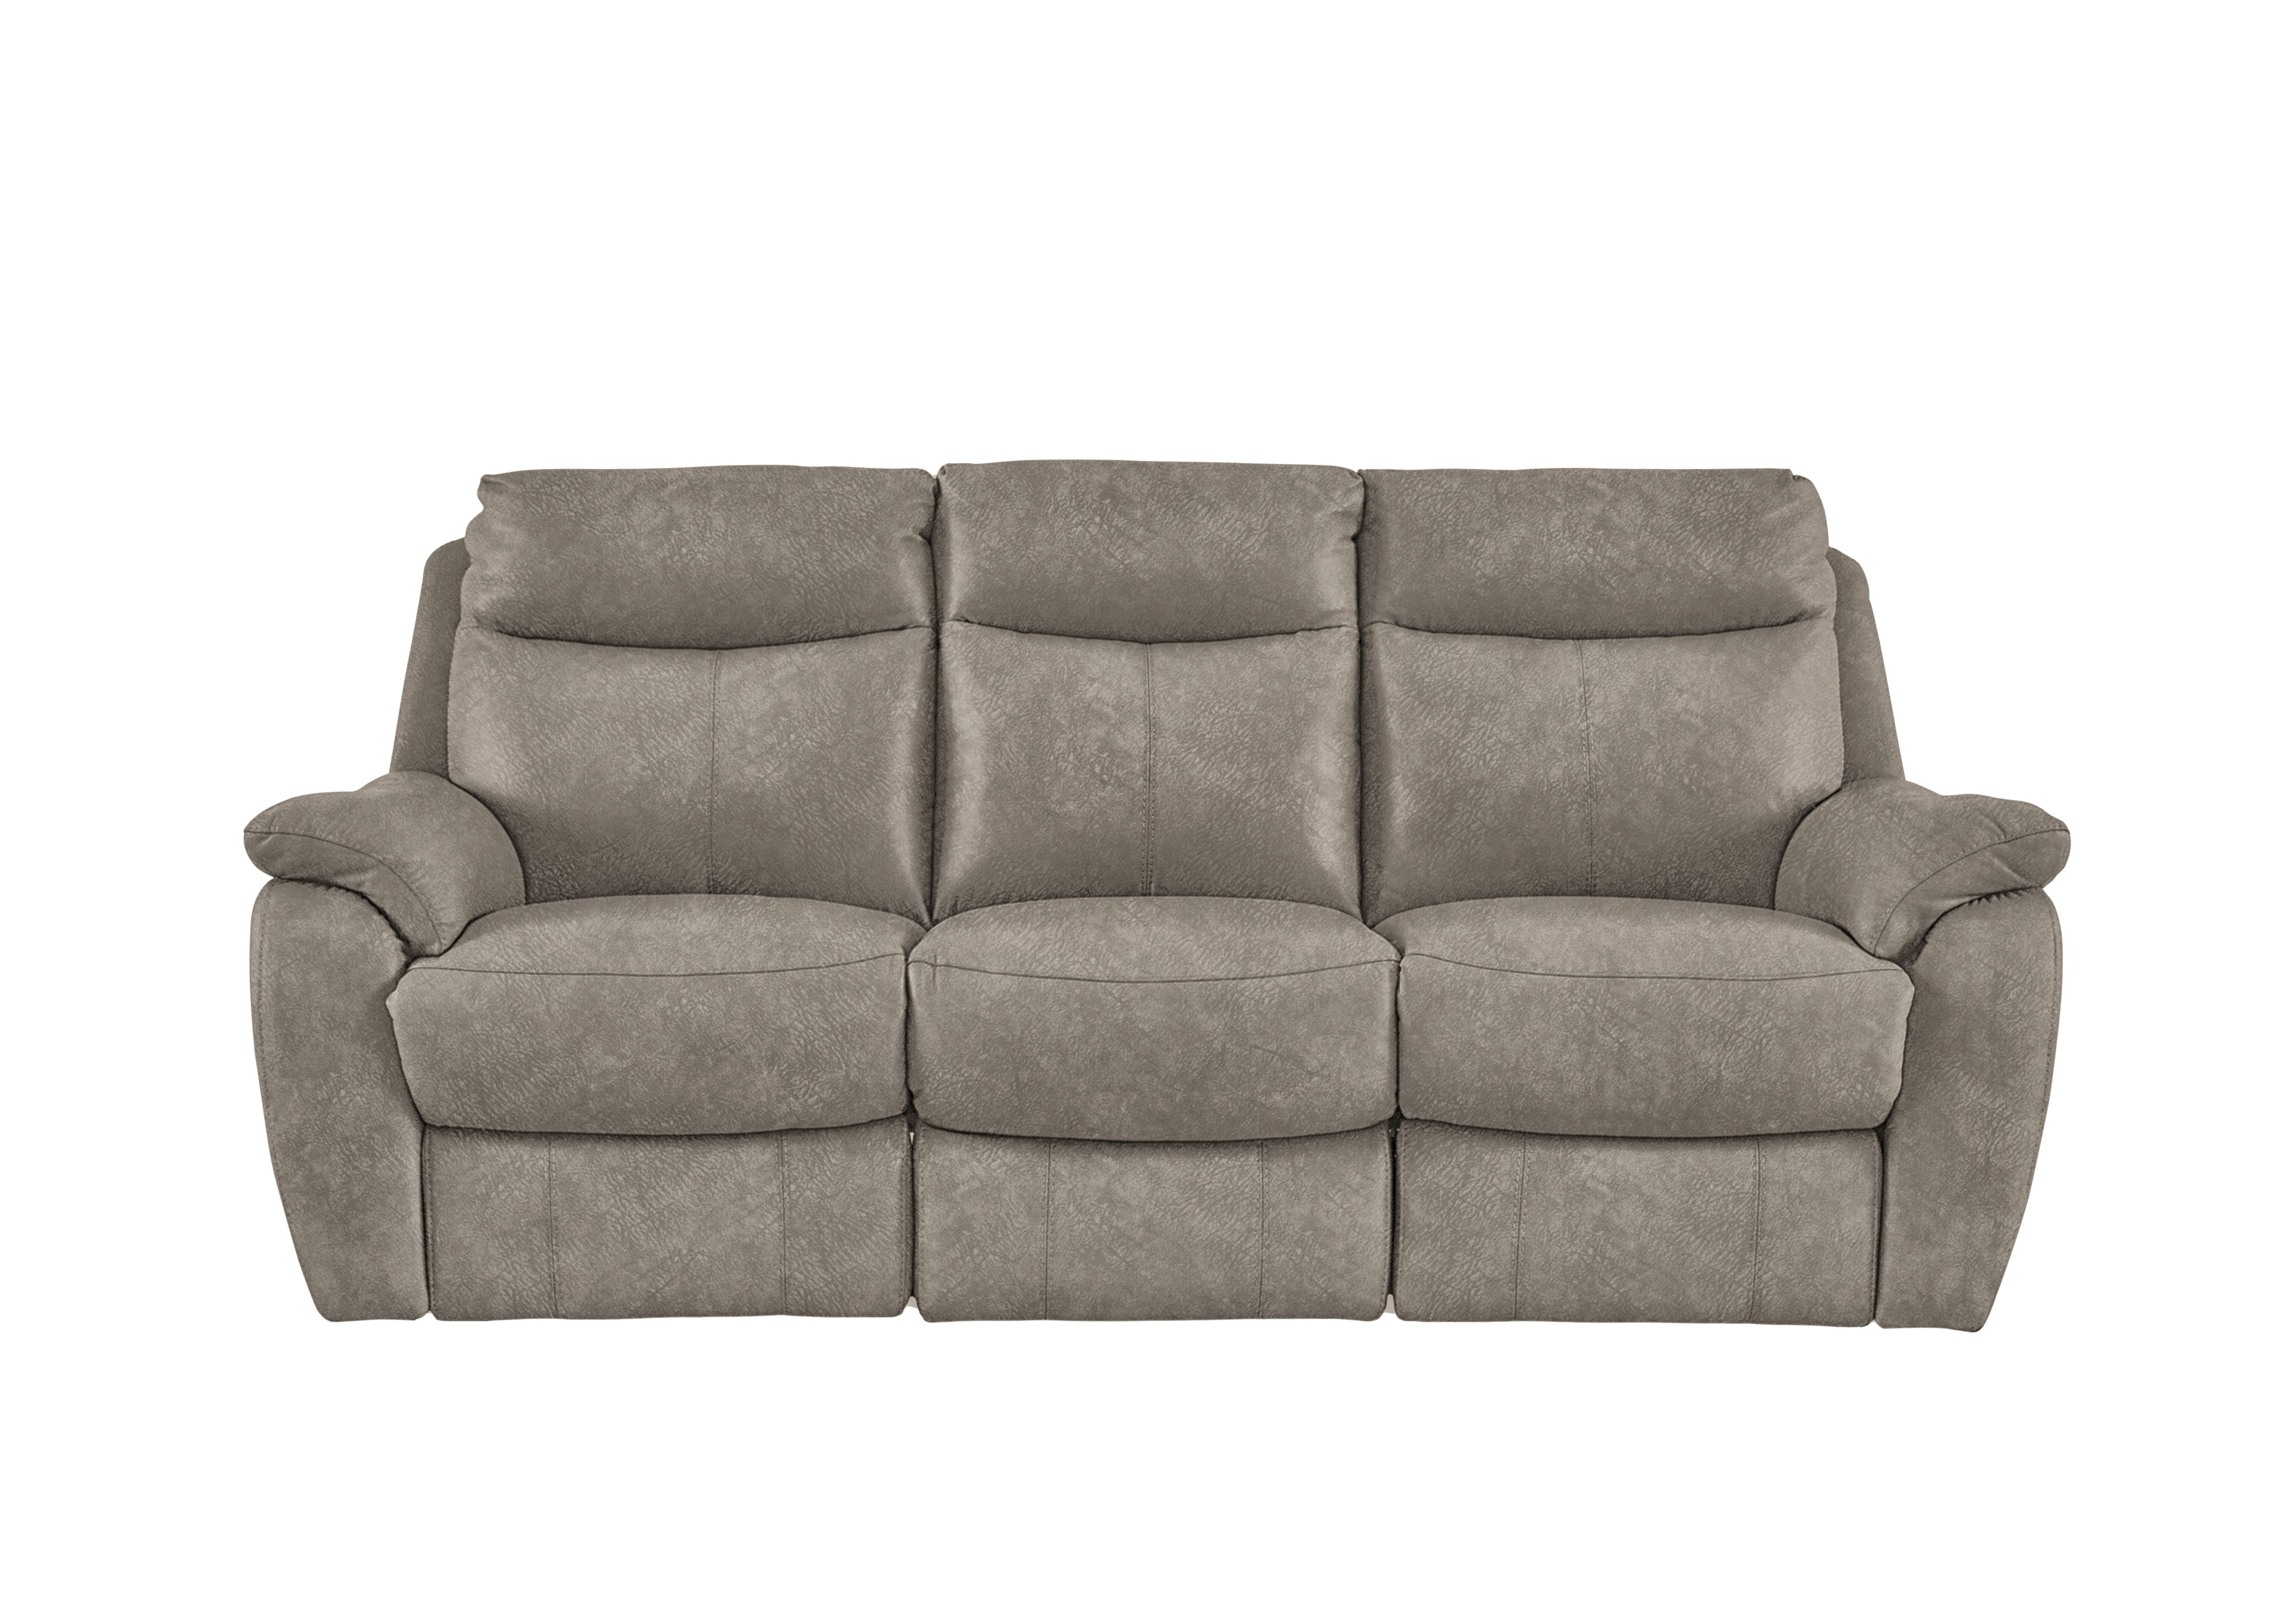 Snug 3 Seater Fabric Sofa in Bfa-Bnn-R29 Fv1 Mink on Furniture Village